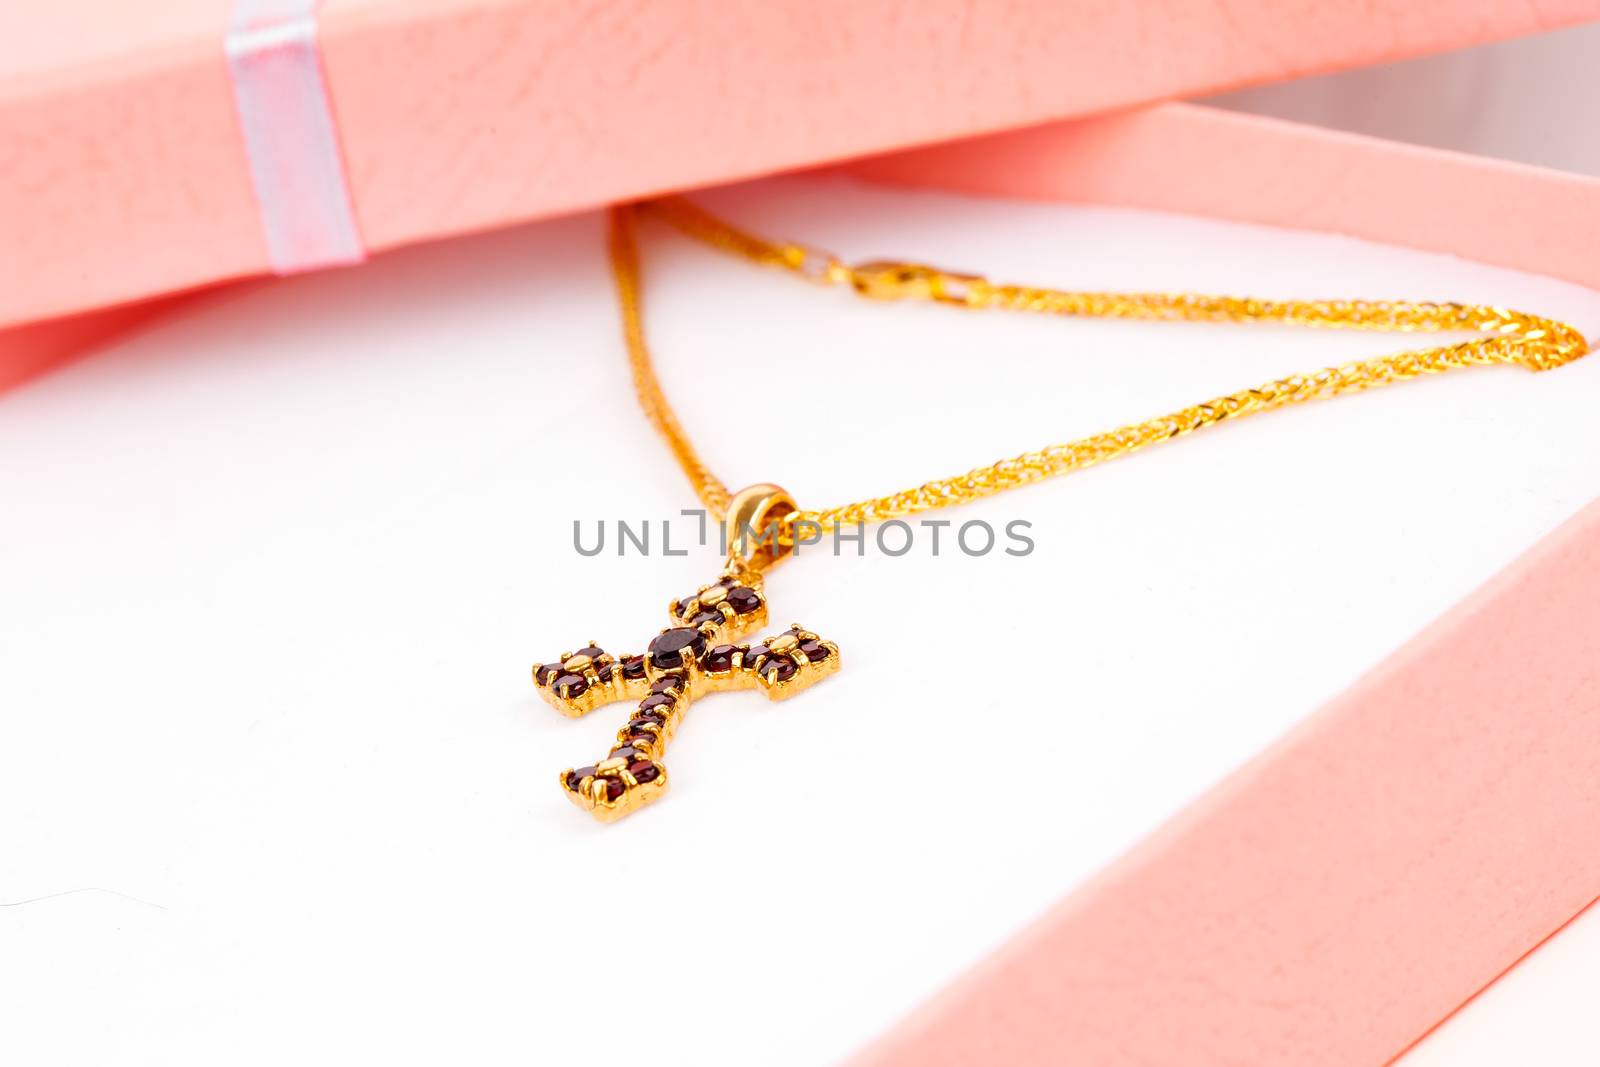 Golden Cross with garnets in packaged by motorolka